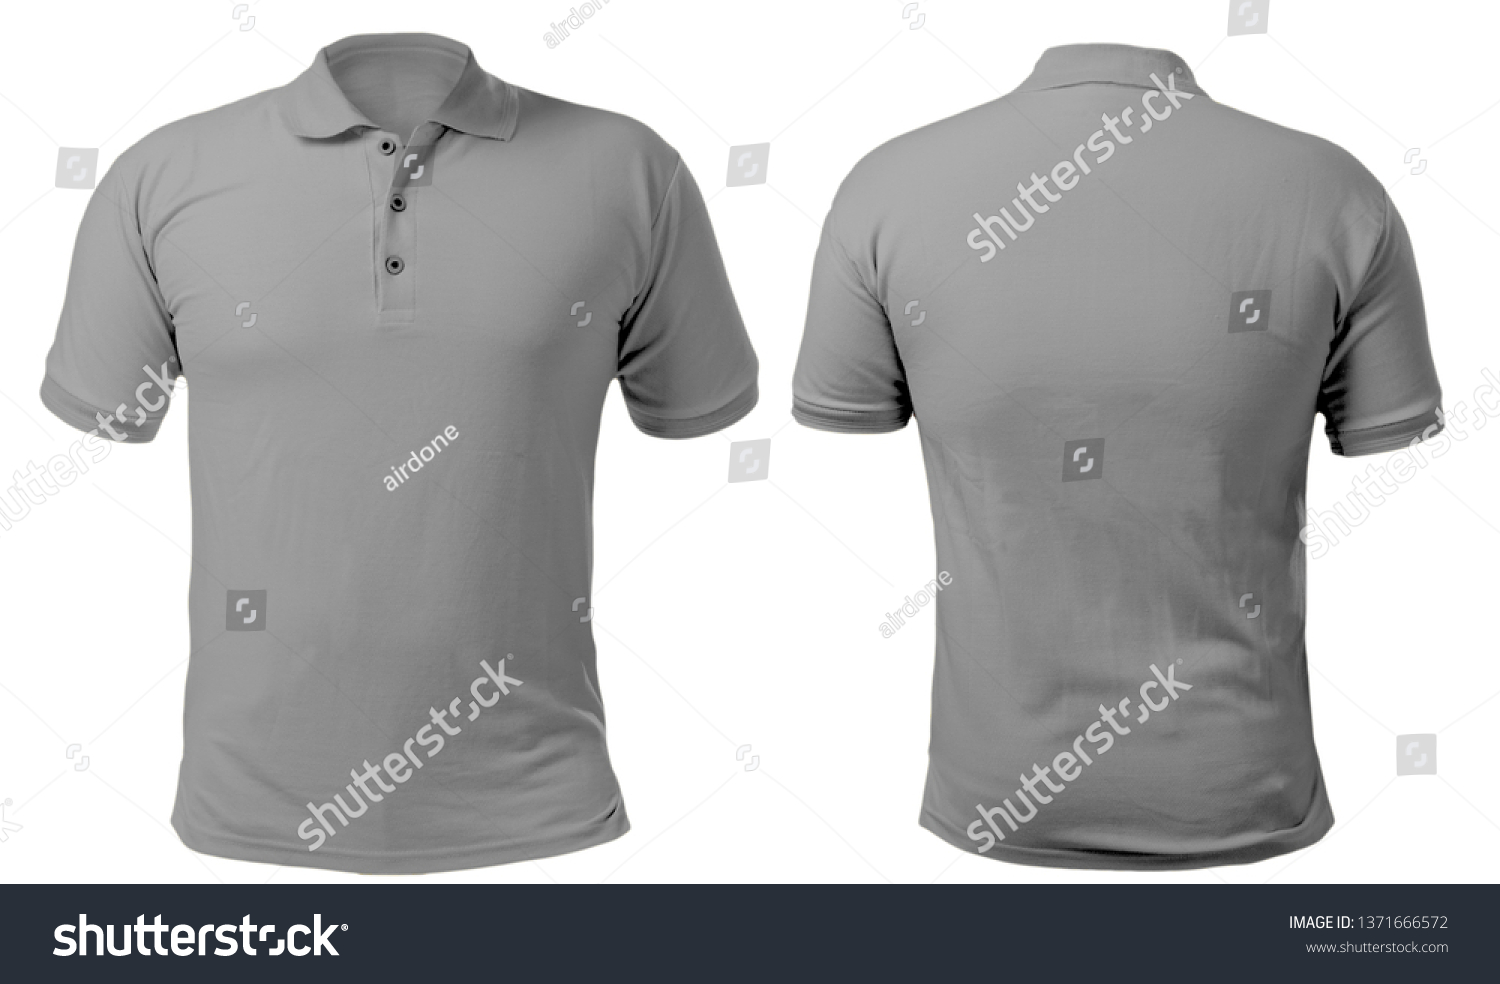 2,877 Grey collar t shirt Images, Stock Photos & Vectors | Shutterstock